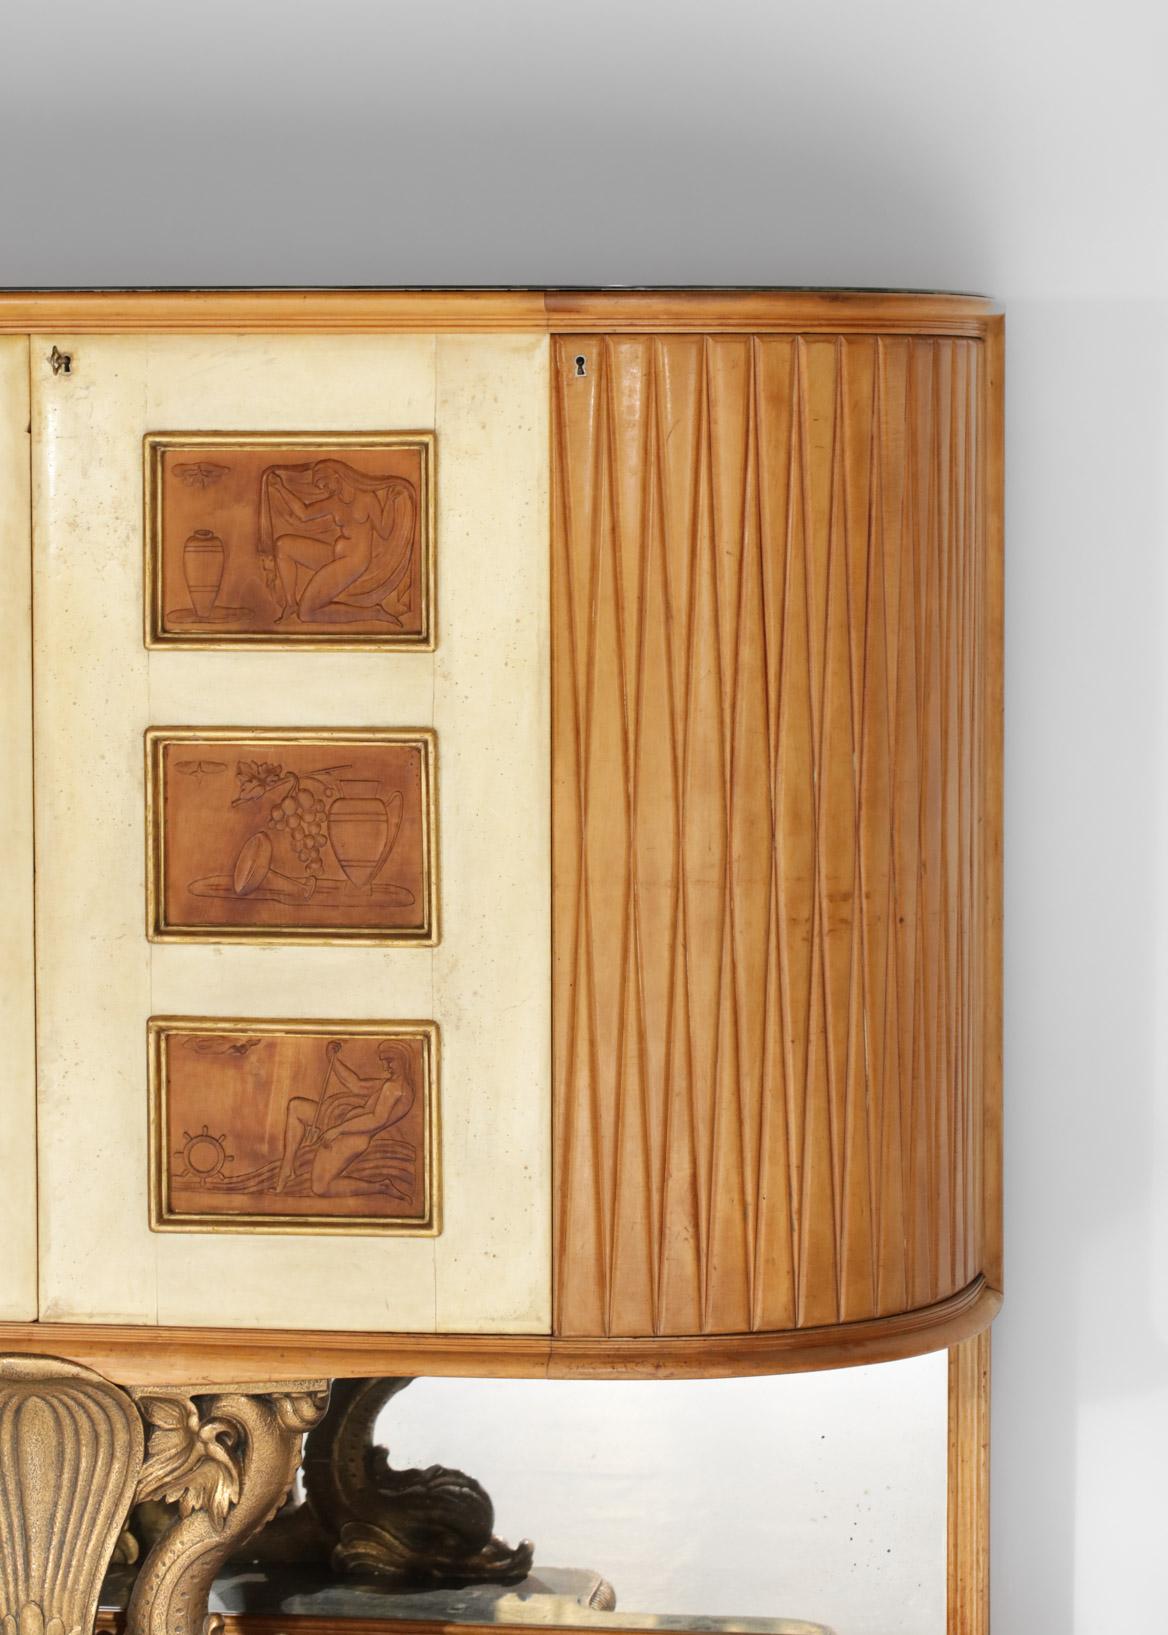 Large Italian Bar Furniture by Osvaldo Borsani in Wood and Parchment 1940, E379 1